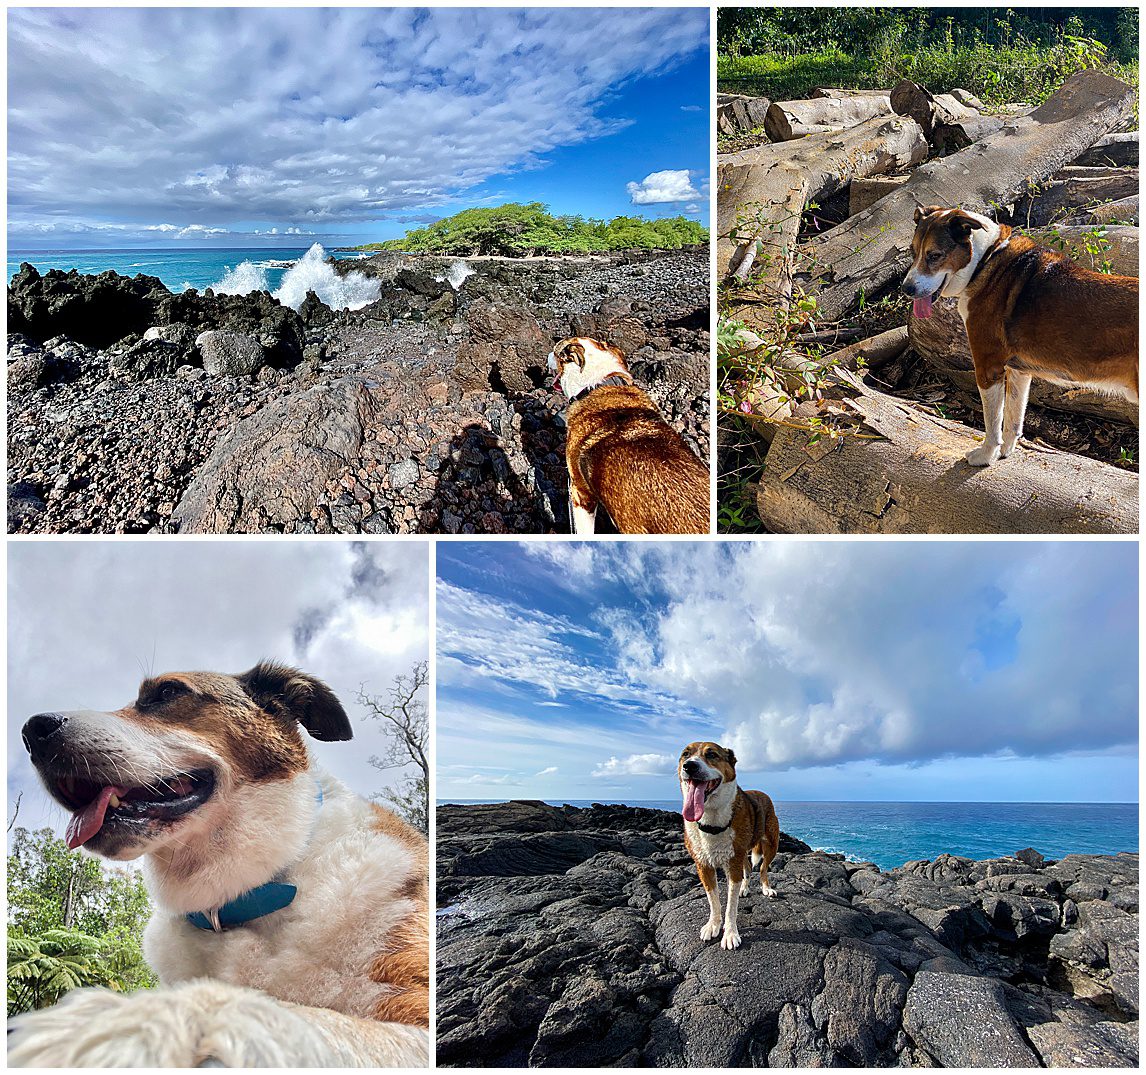 elvis presley baldwin on the rocks hawaii no wm-0013.jpg